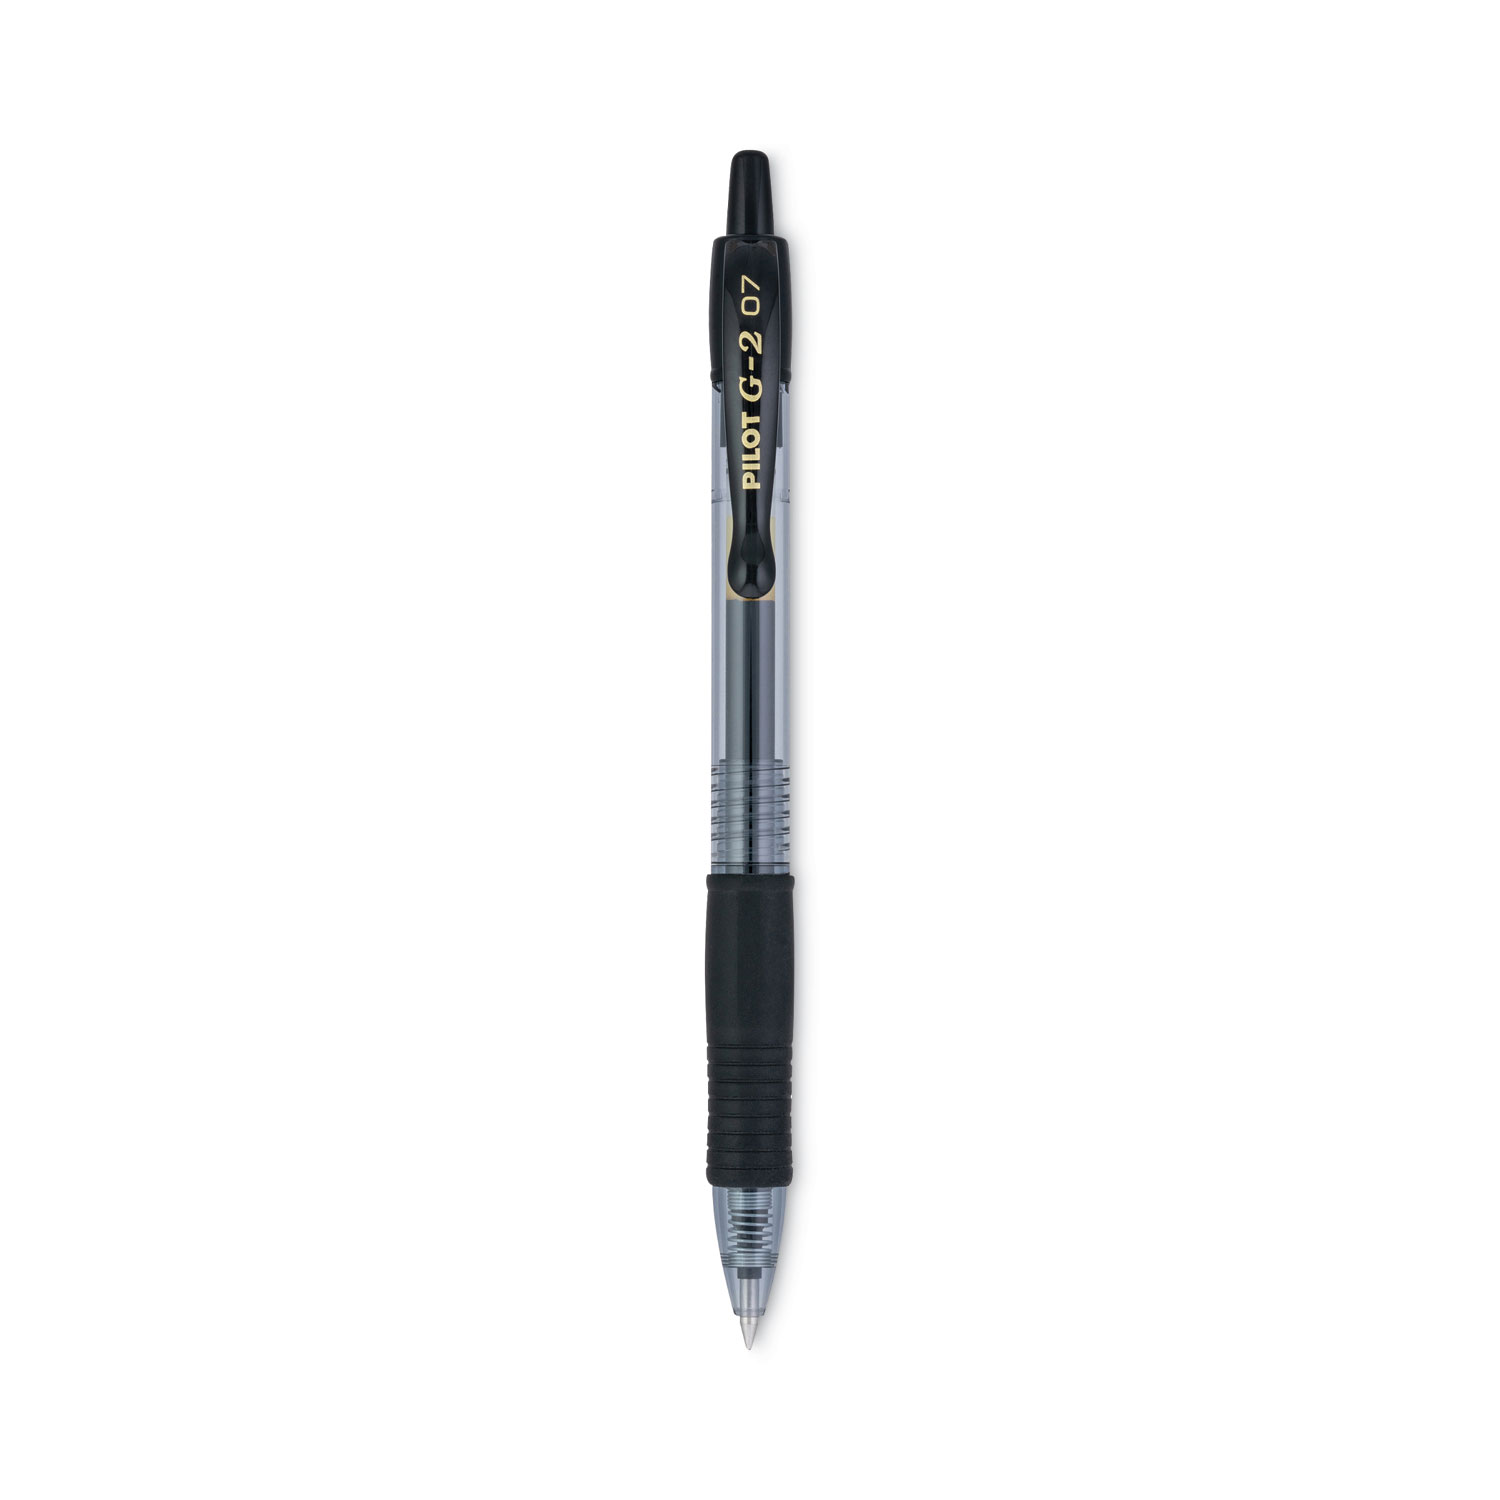 Pilot G2 Premium Gel Roller Ball Pens - Fine Point - 0.7mm - 10 pack